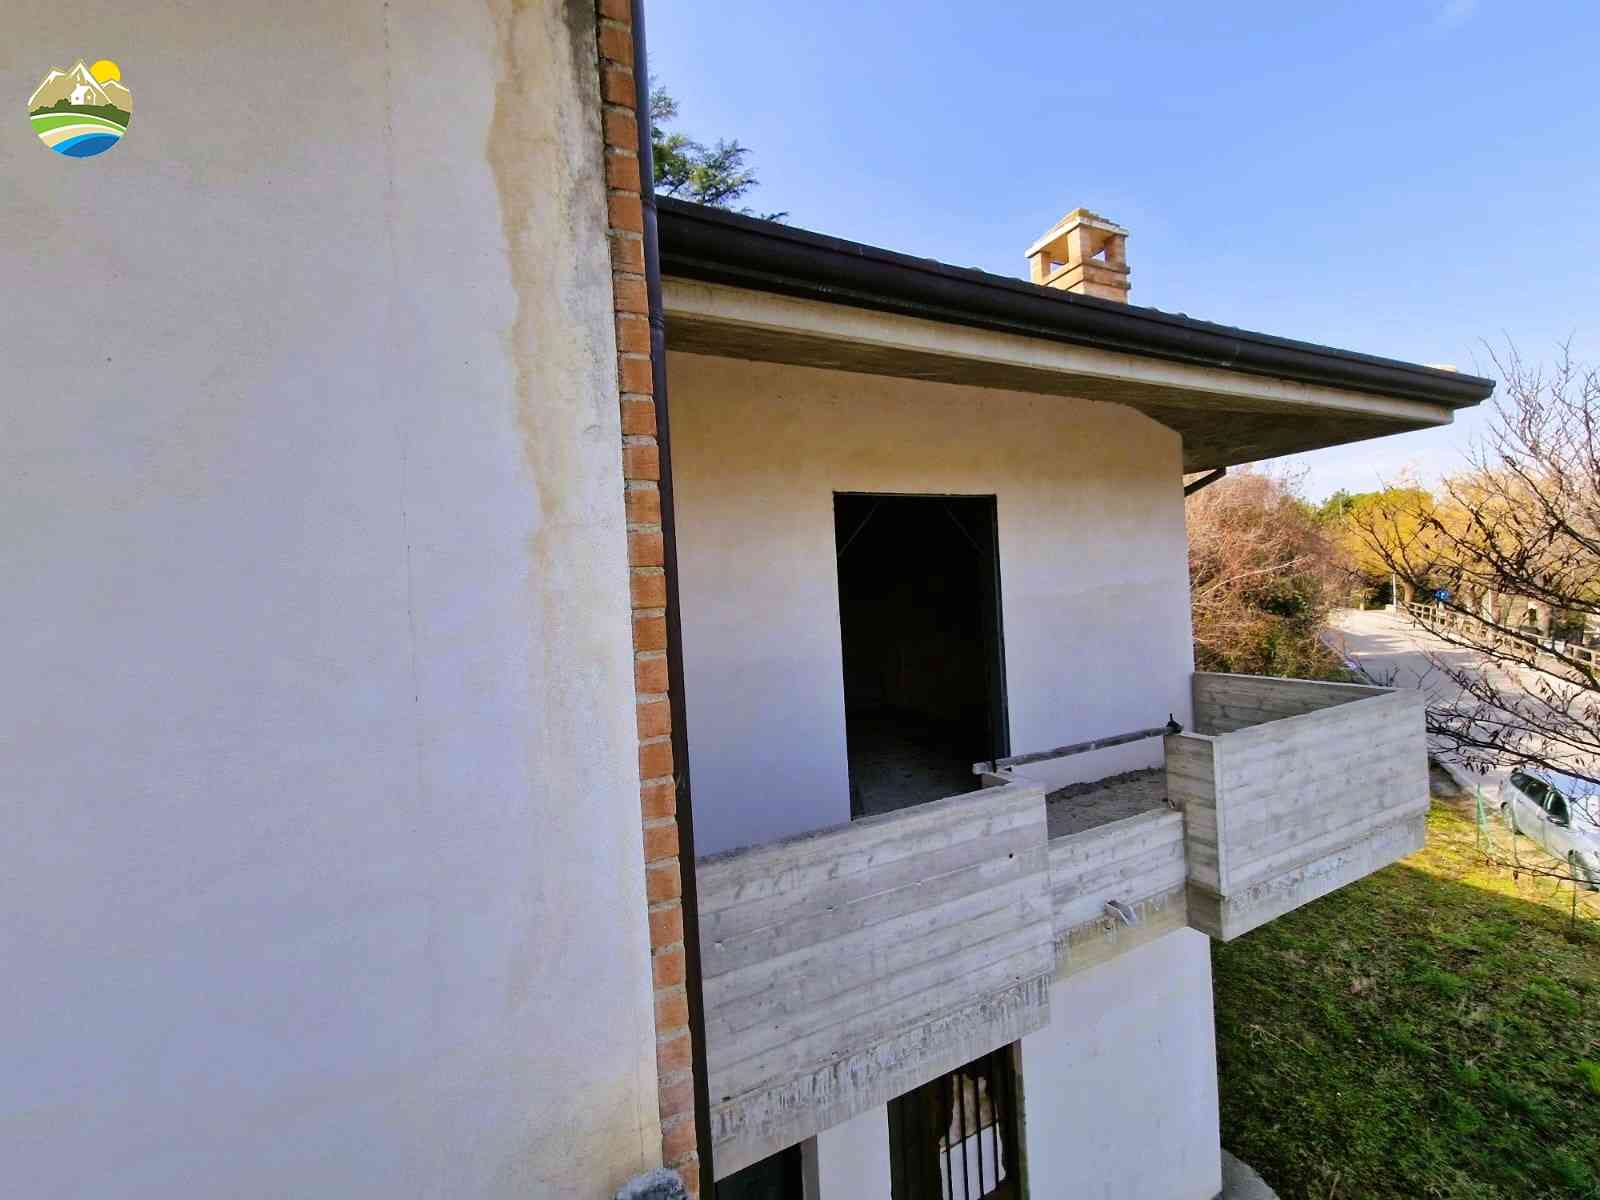 Villa Villa in vendita Castilenti (TE), Villa Mandorlo - Castilenti - EUR 129.450 810